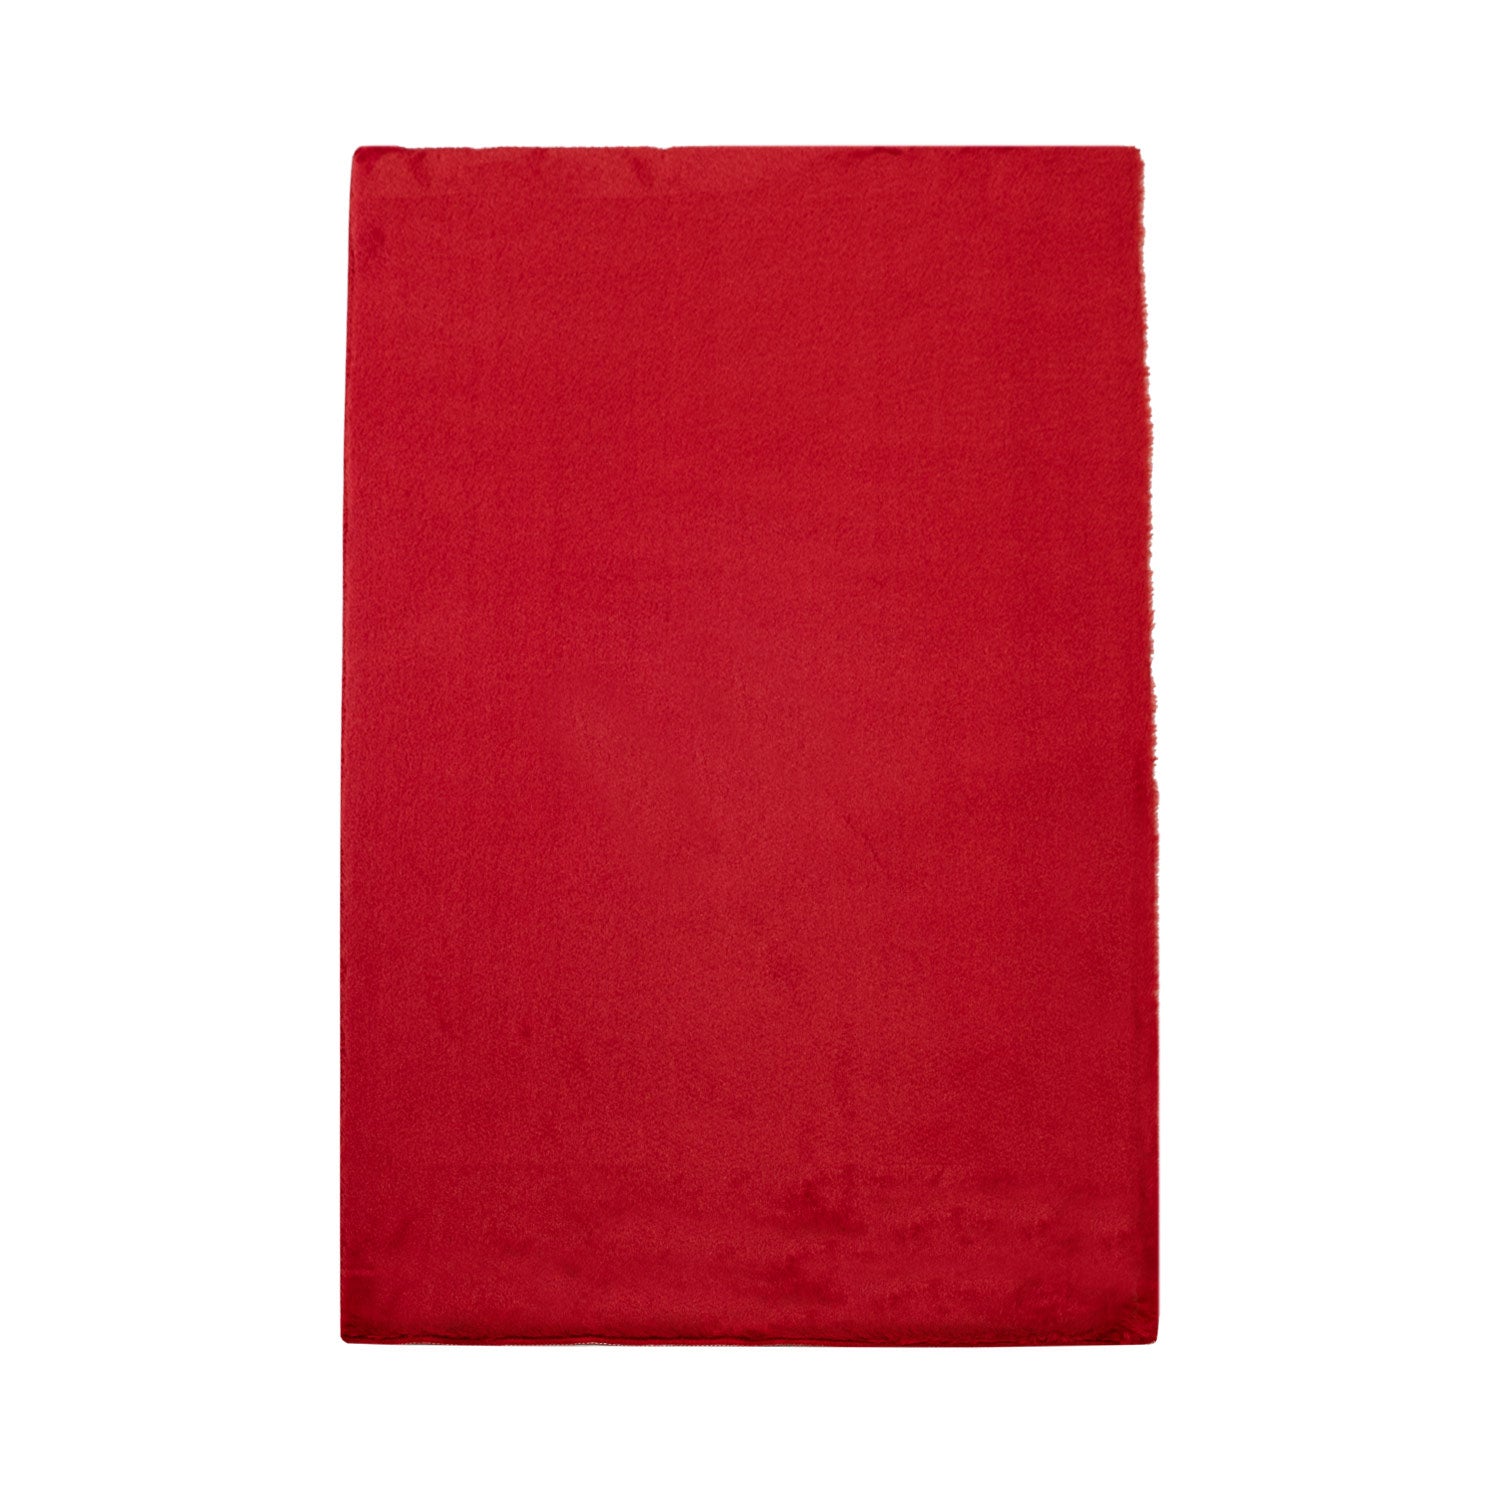 Bademåtte Topia Måtter 400 Rød, 80x150 cm